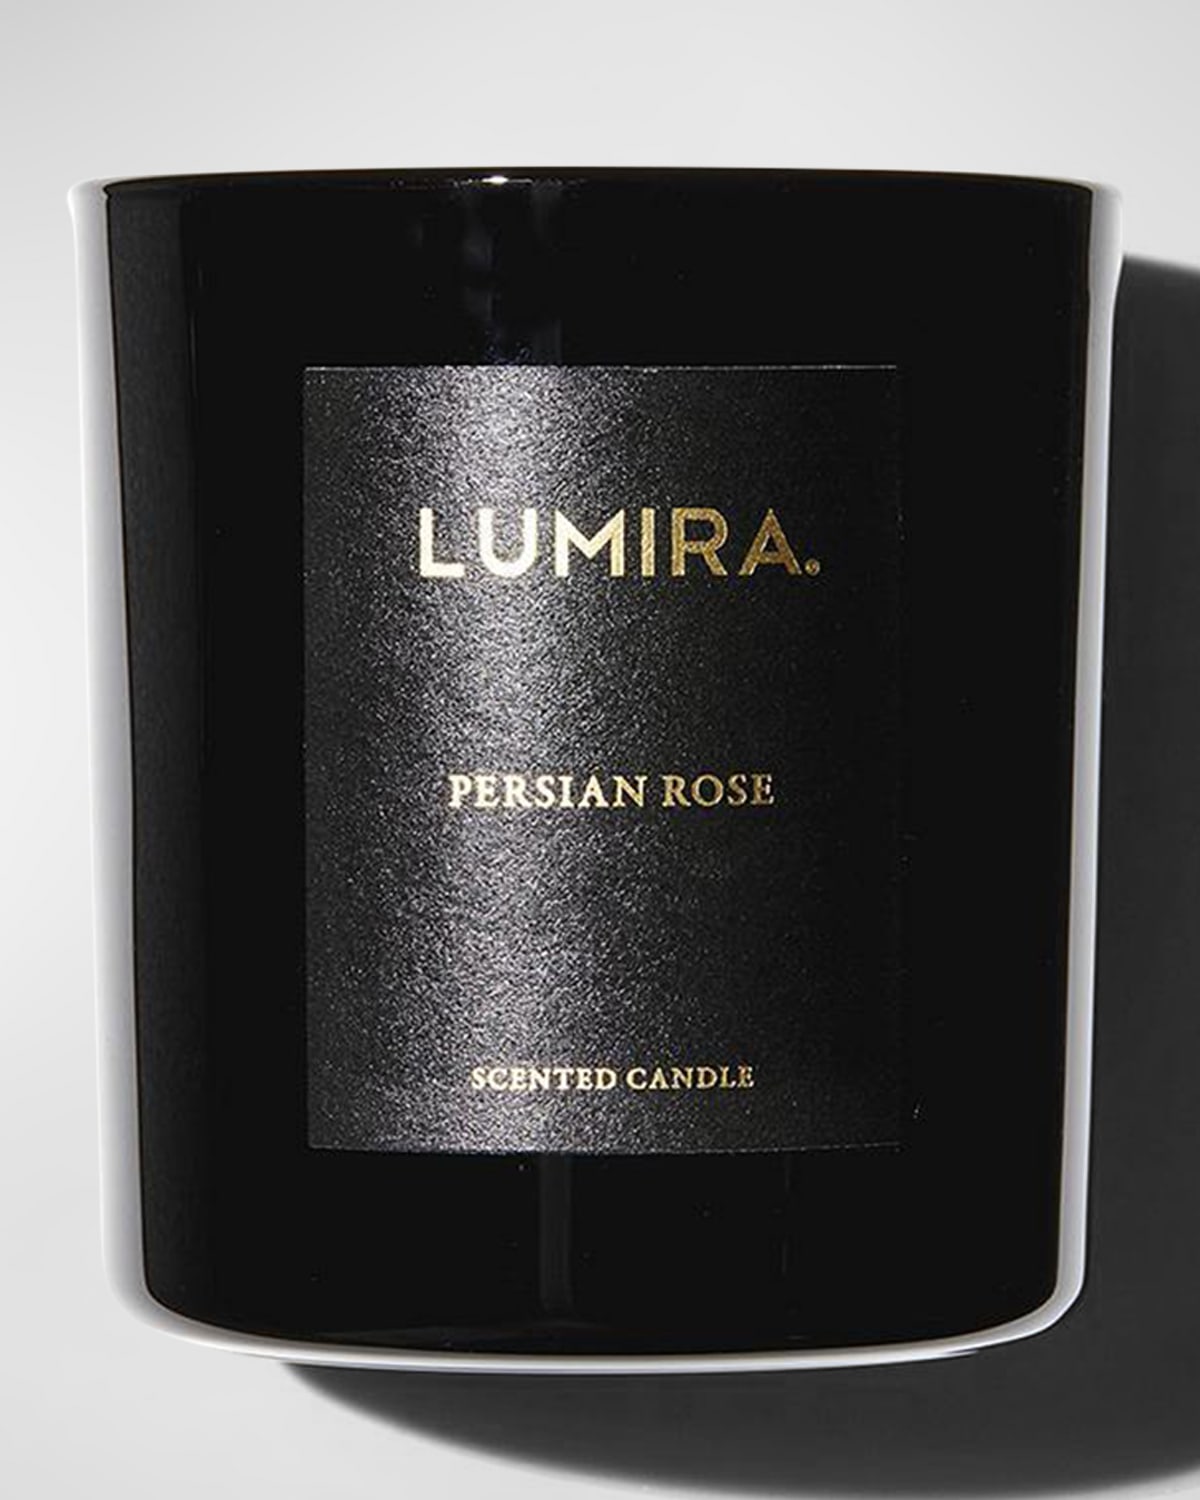 LUMIRA PERSIAN ROSE BLACK CANDLE, 10.5 OZ.